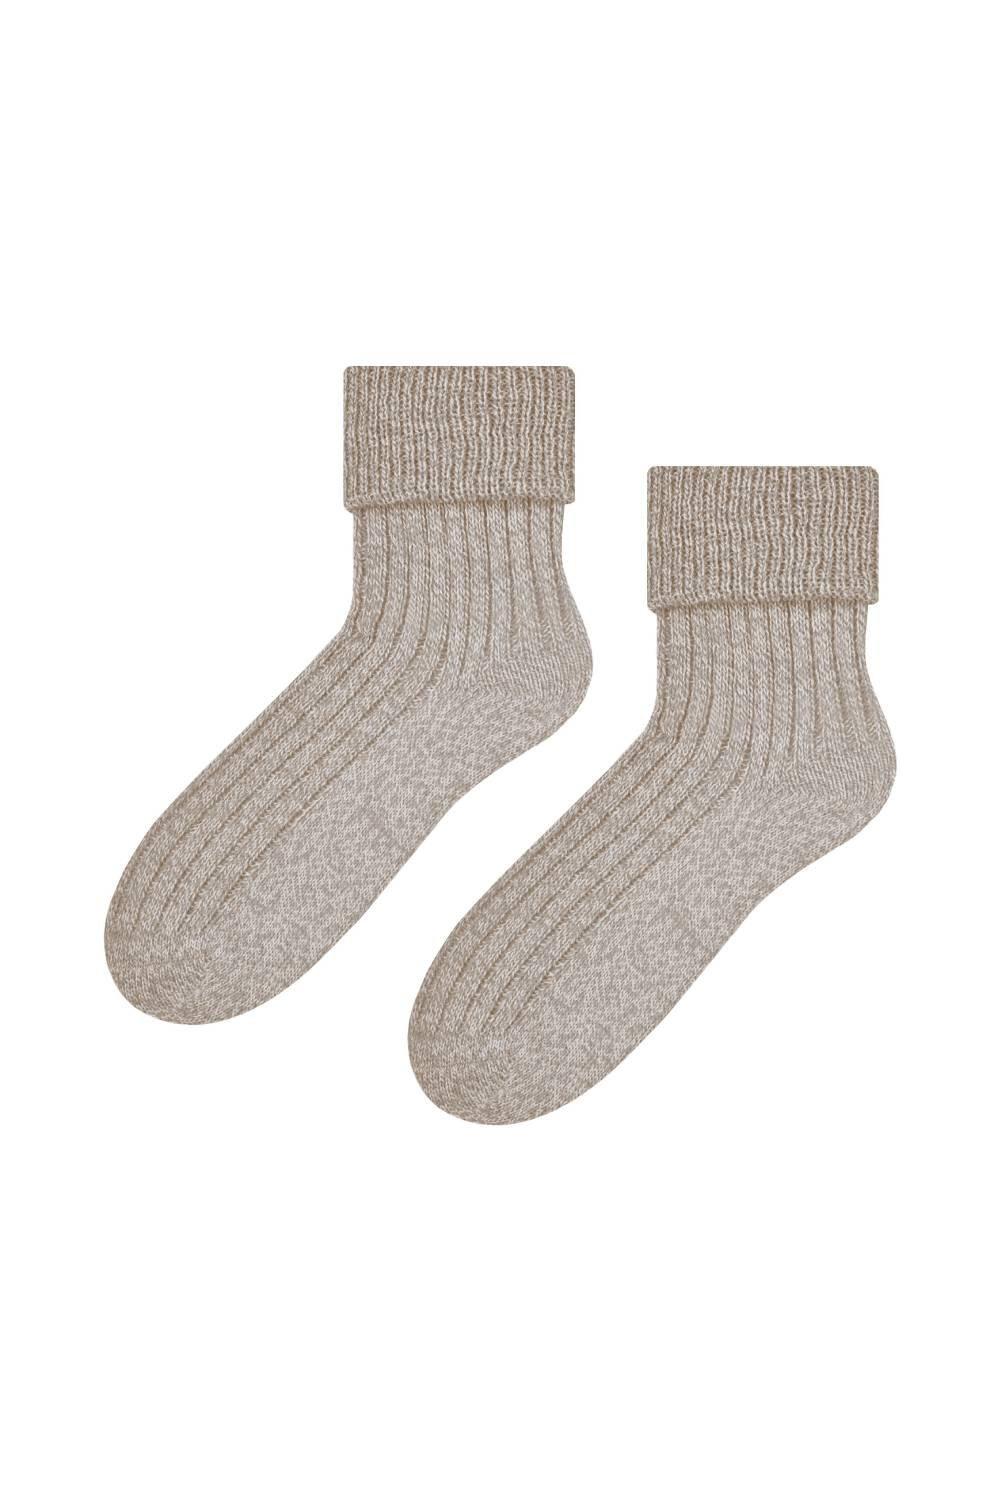 Wool Bed Socks Luxurious Super Soft Cosy Lounge Sleep Socks